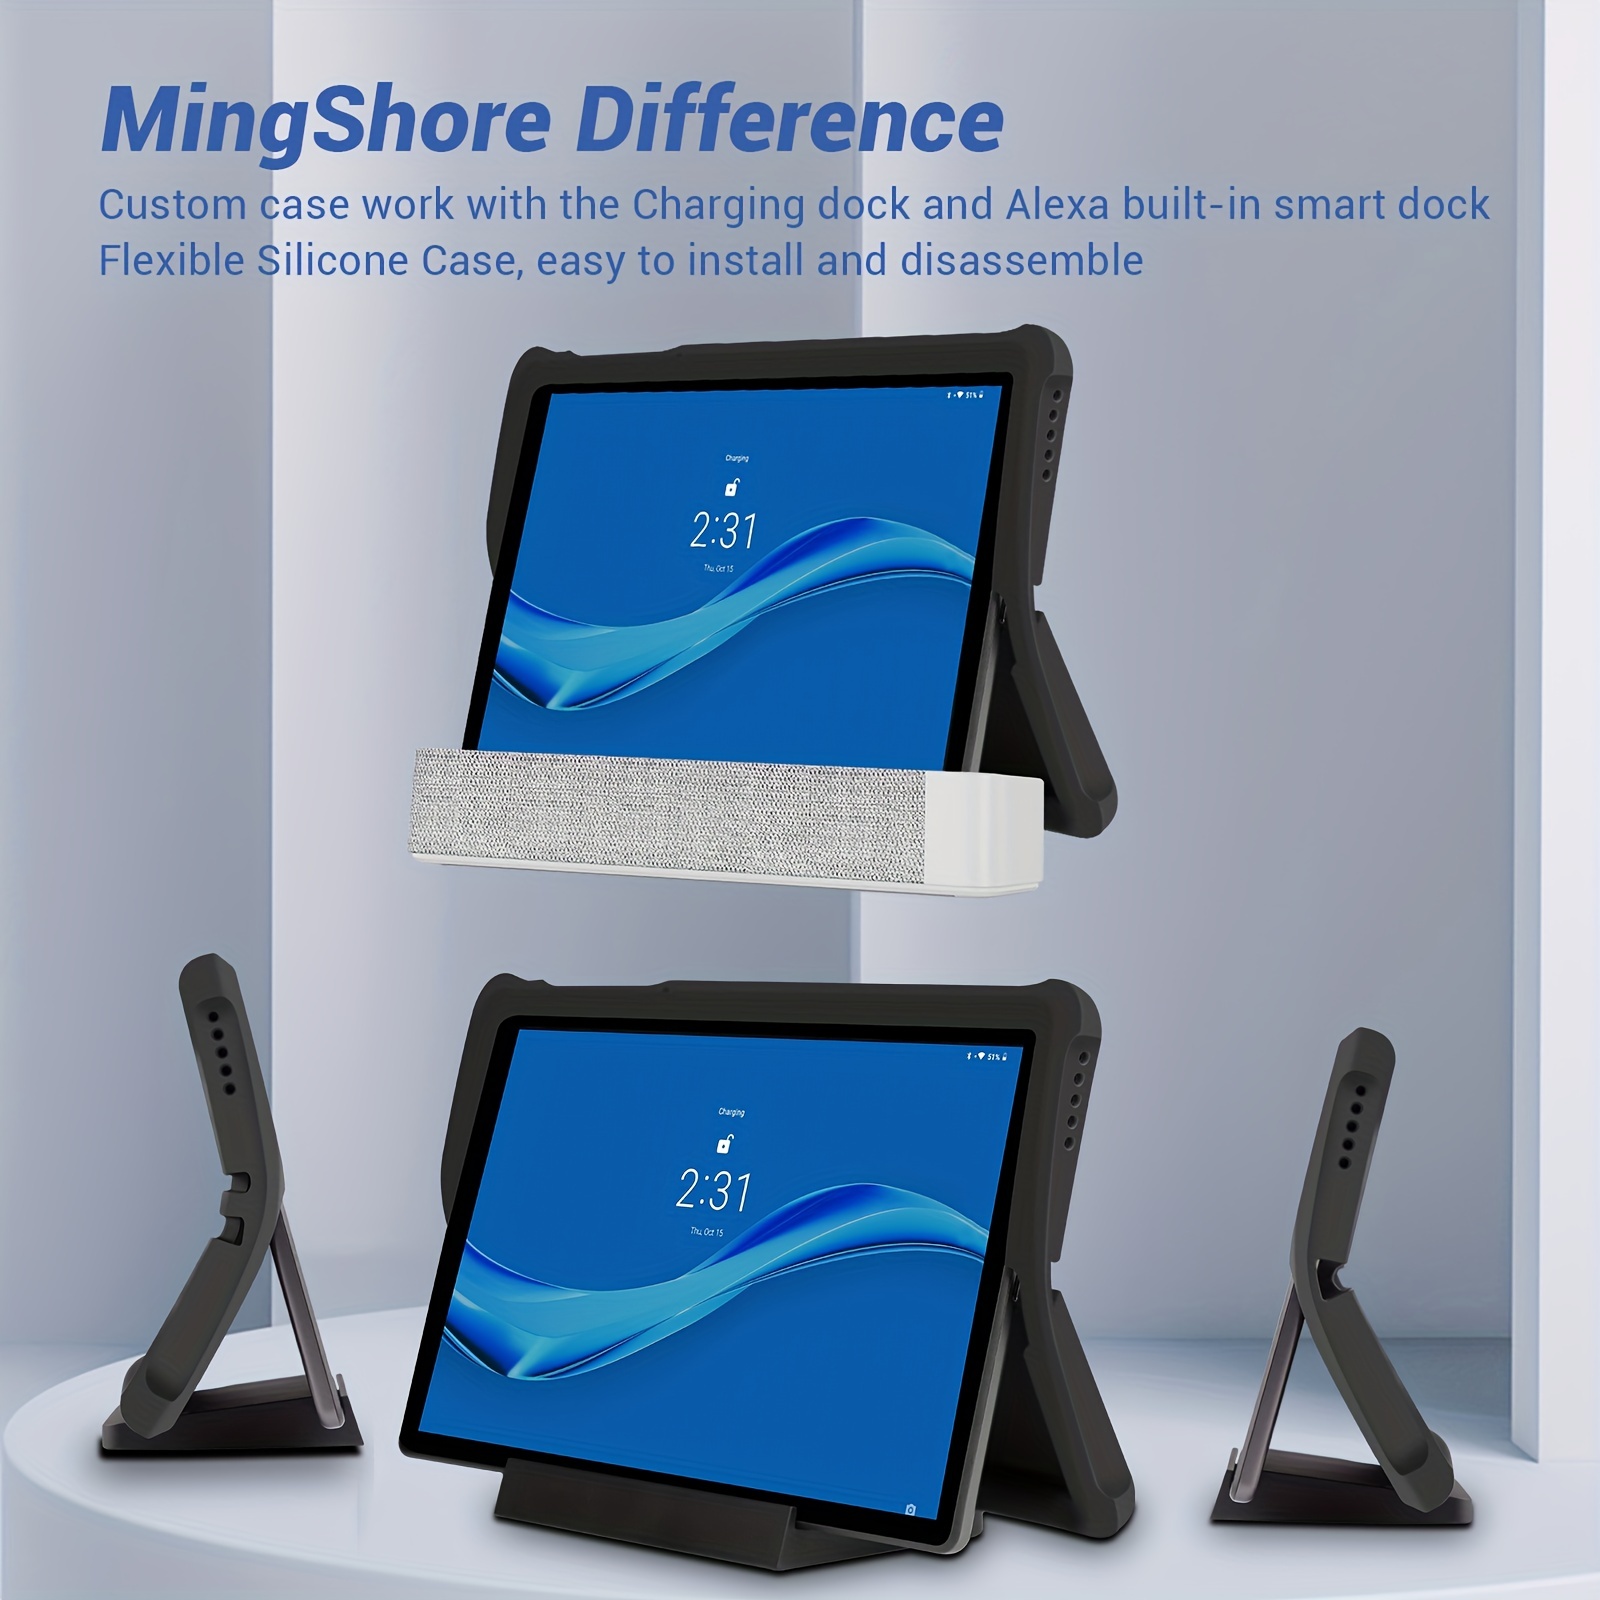 Tablet Case For Lenovo Tab M10 3rd Gen TB328FU/XU 10.1 Shockproof Eva Kids  Cover